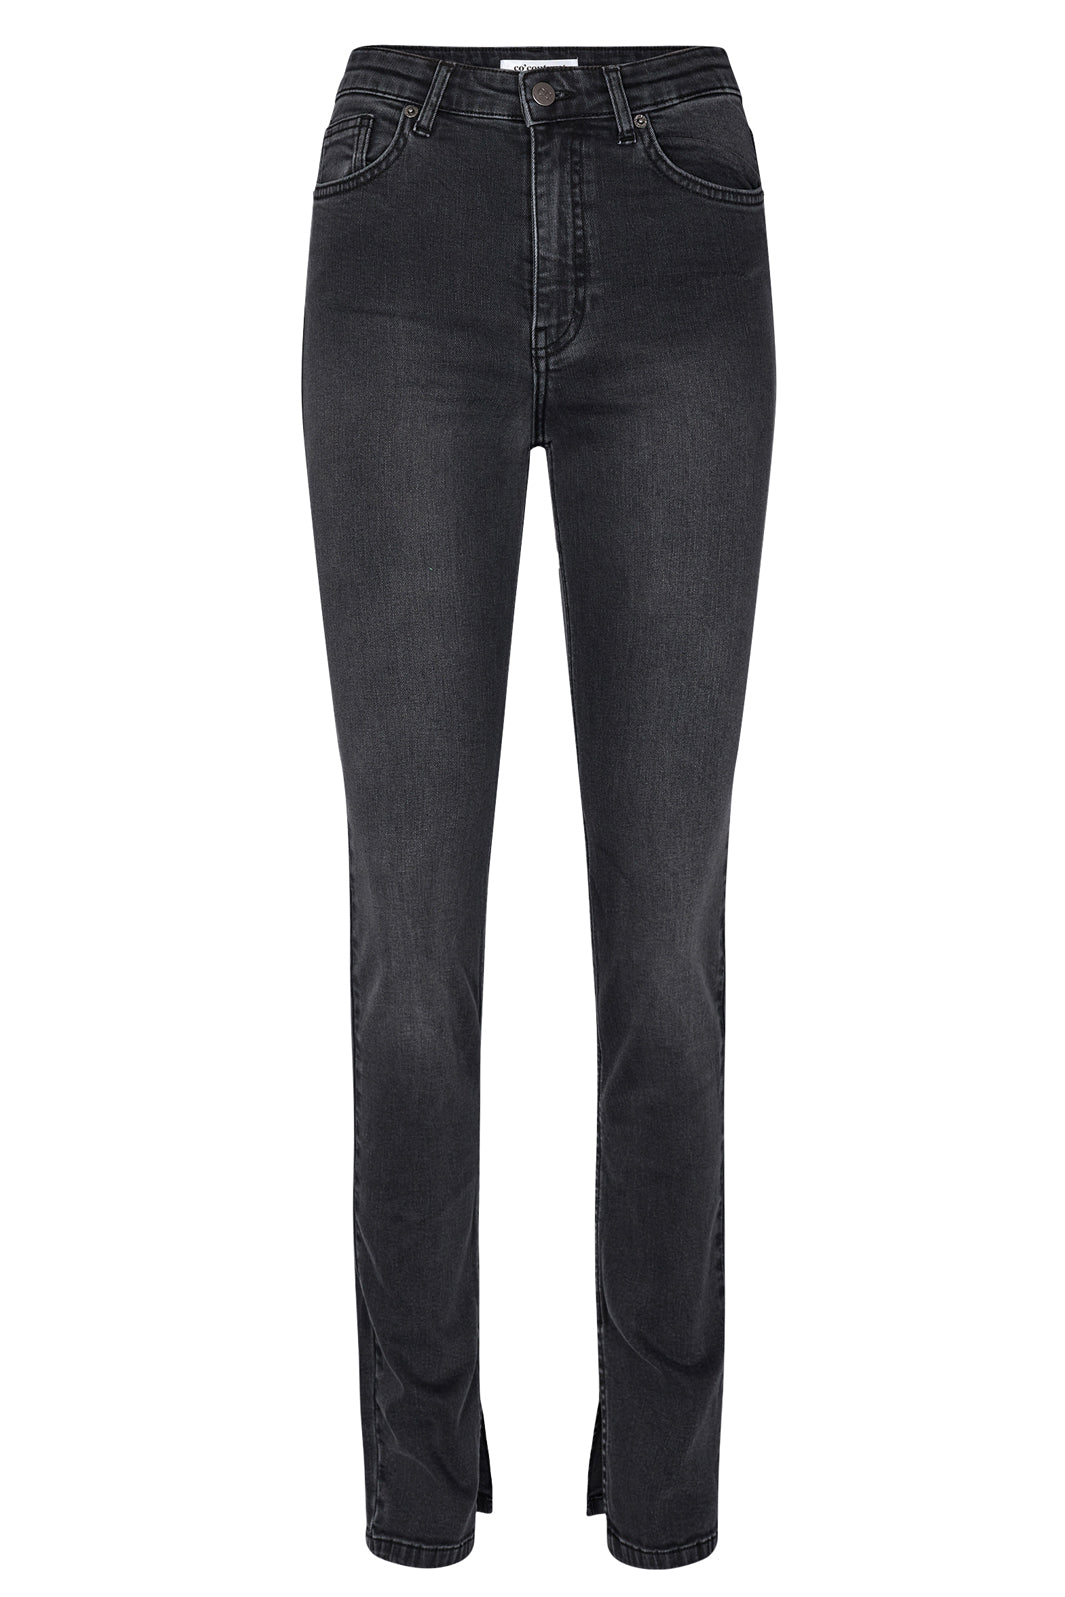 Co'couture - Denny Slit Jeans - Black Jeans 